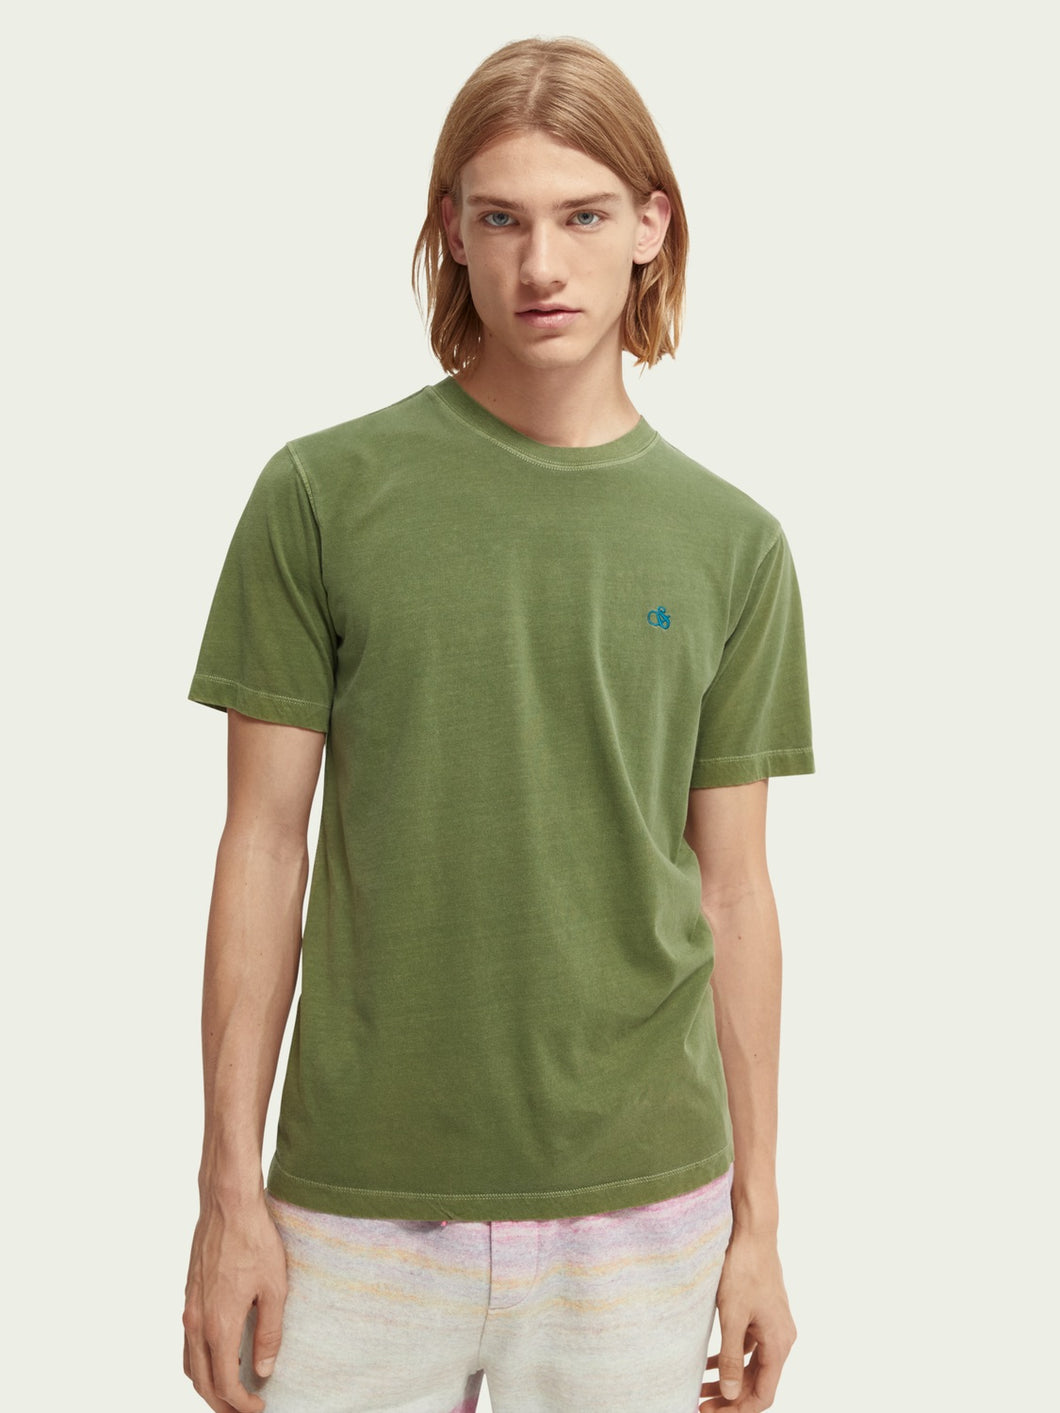 Scotch & Soda Garment Dyed Crew Neck T Shirt - Army - Mensroomlifestyle